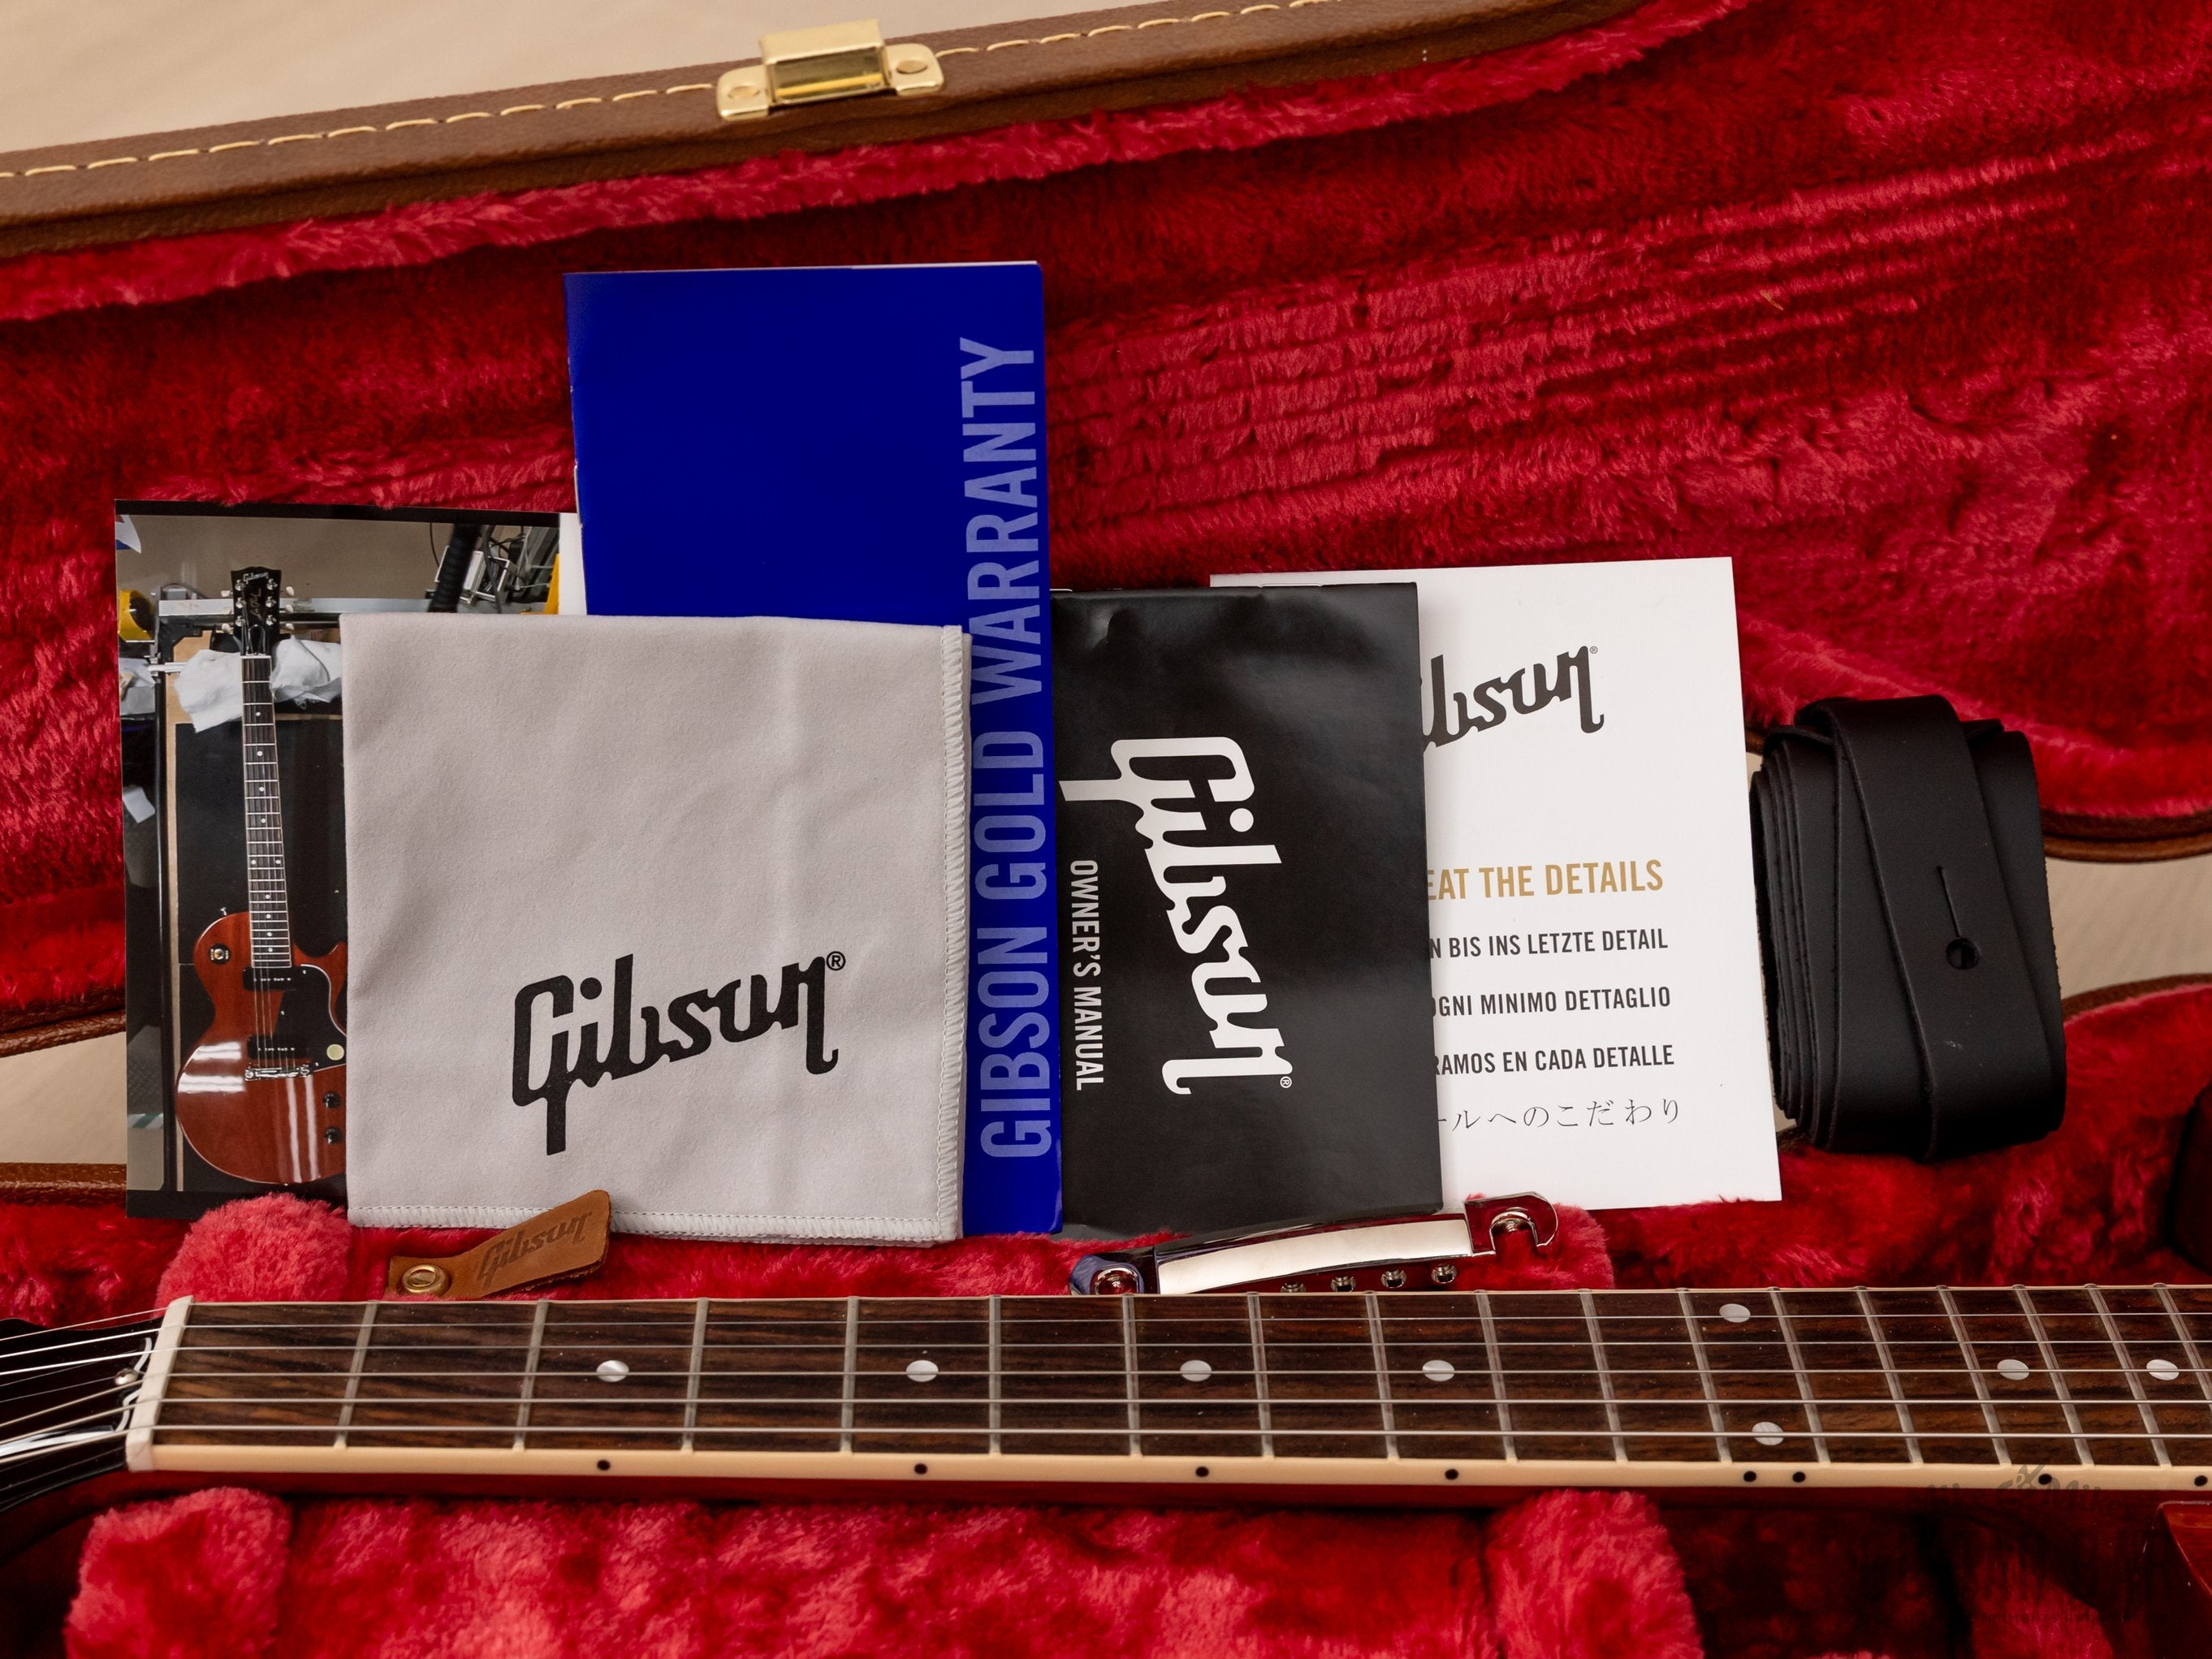 2021 Gibson Les Paul Special Cherry Single Cut Cherry Near-Mint w/ 50s Neck, Hangtags, Case